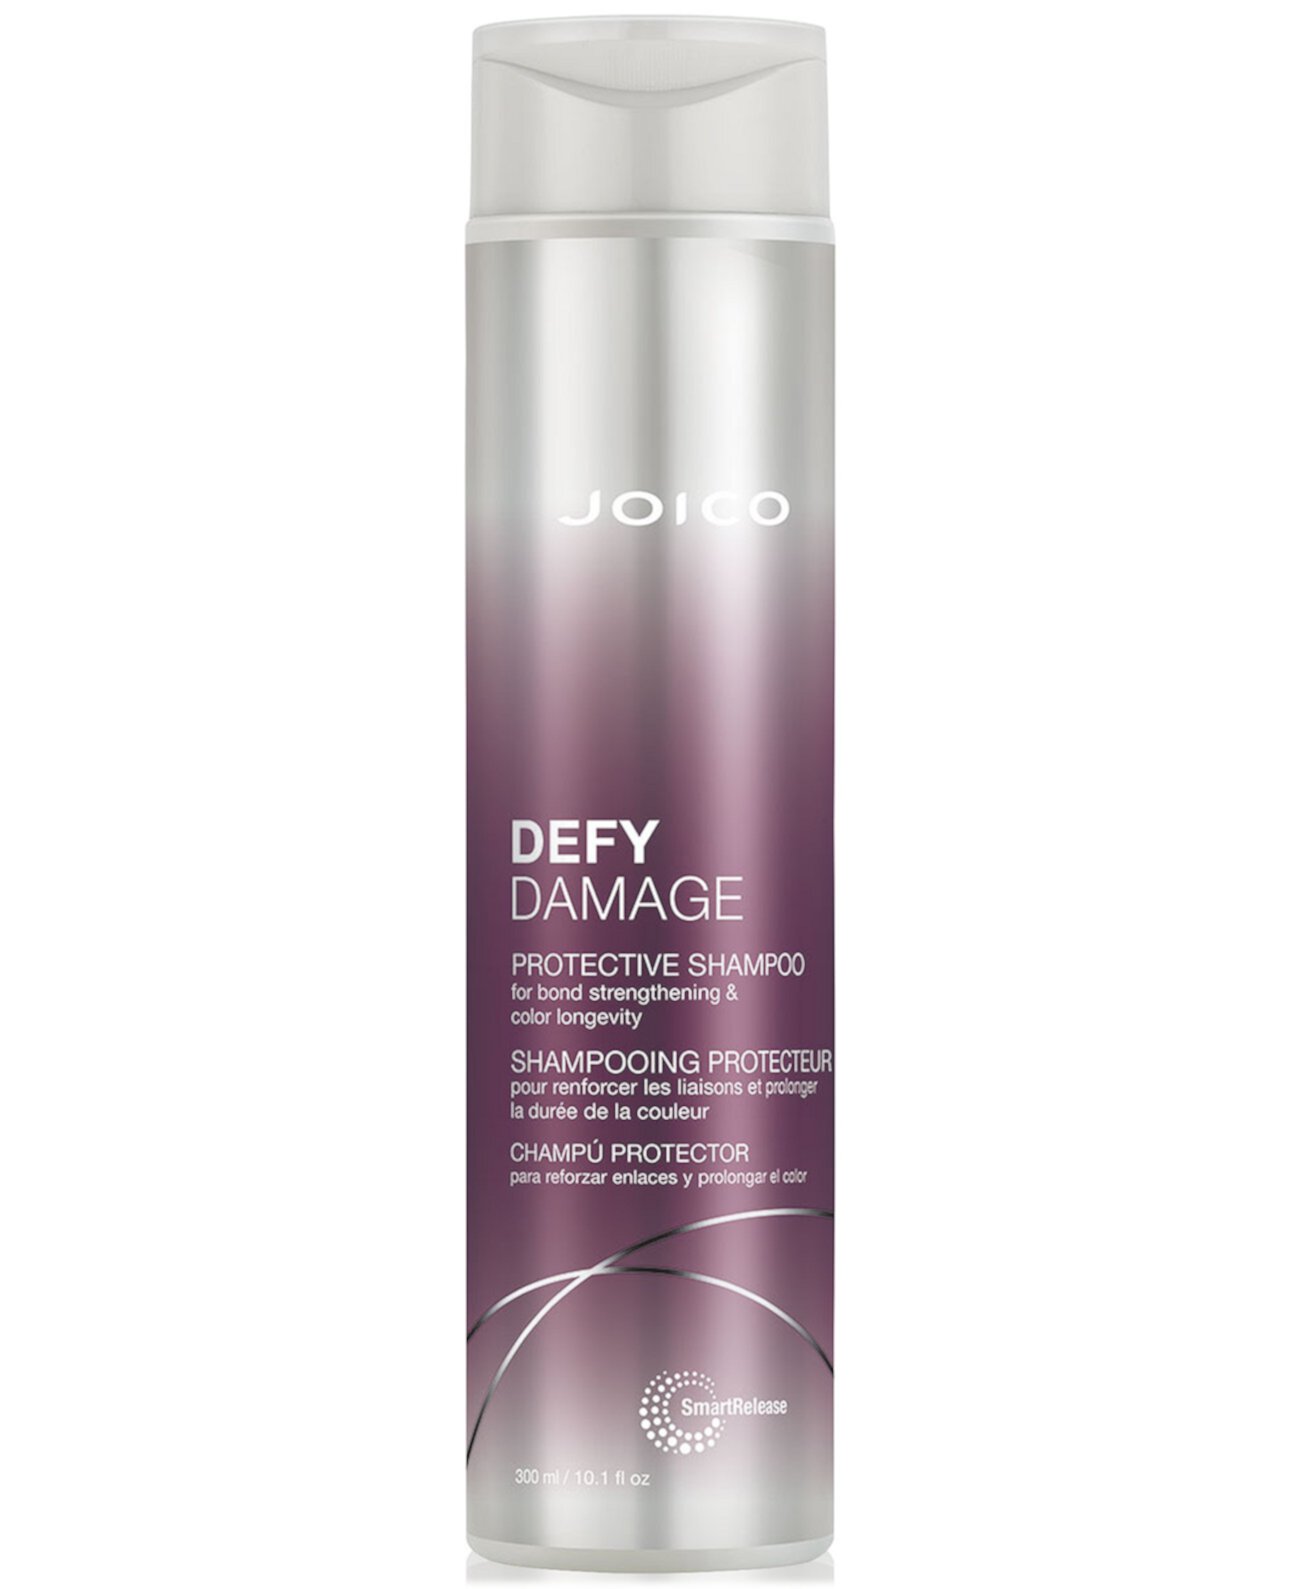 Defy Damage Protective Shampoo, 10,1 унции, от PUREBEAUTY Salon & Spa Joico